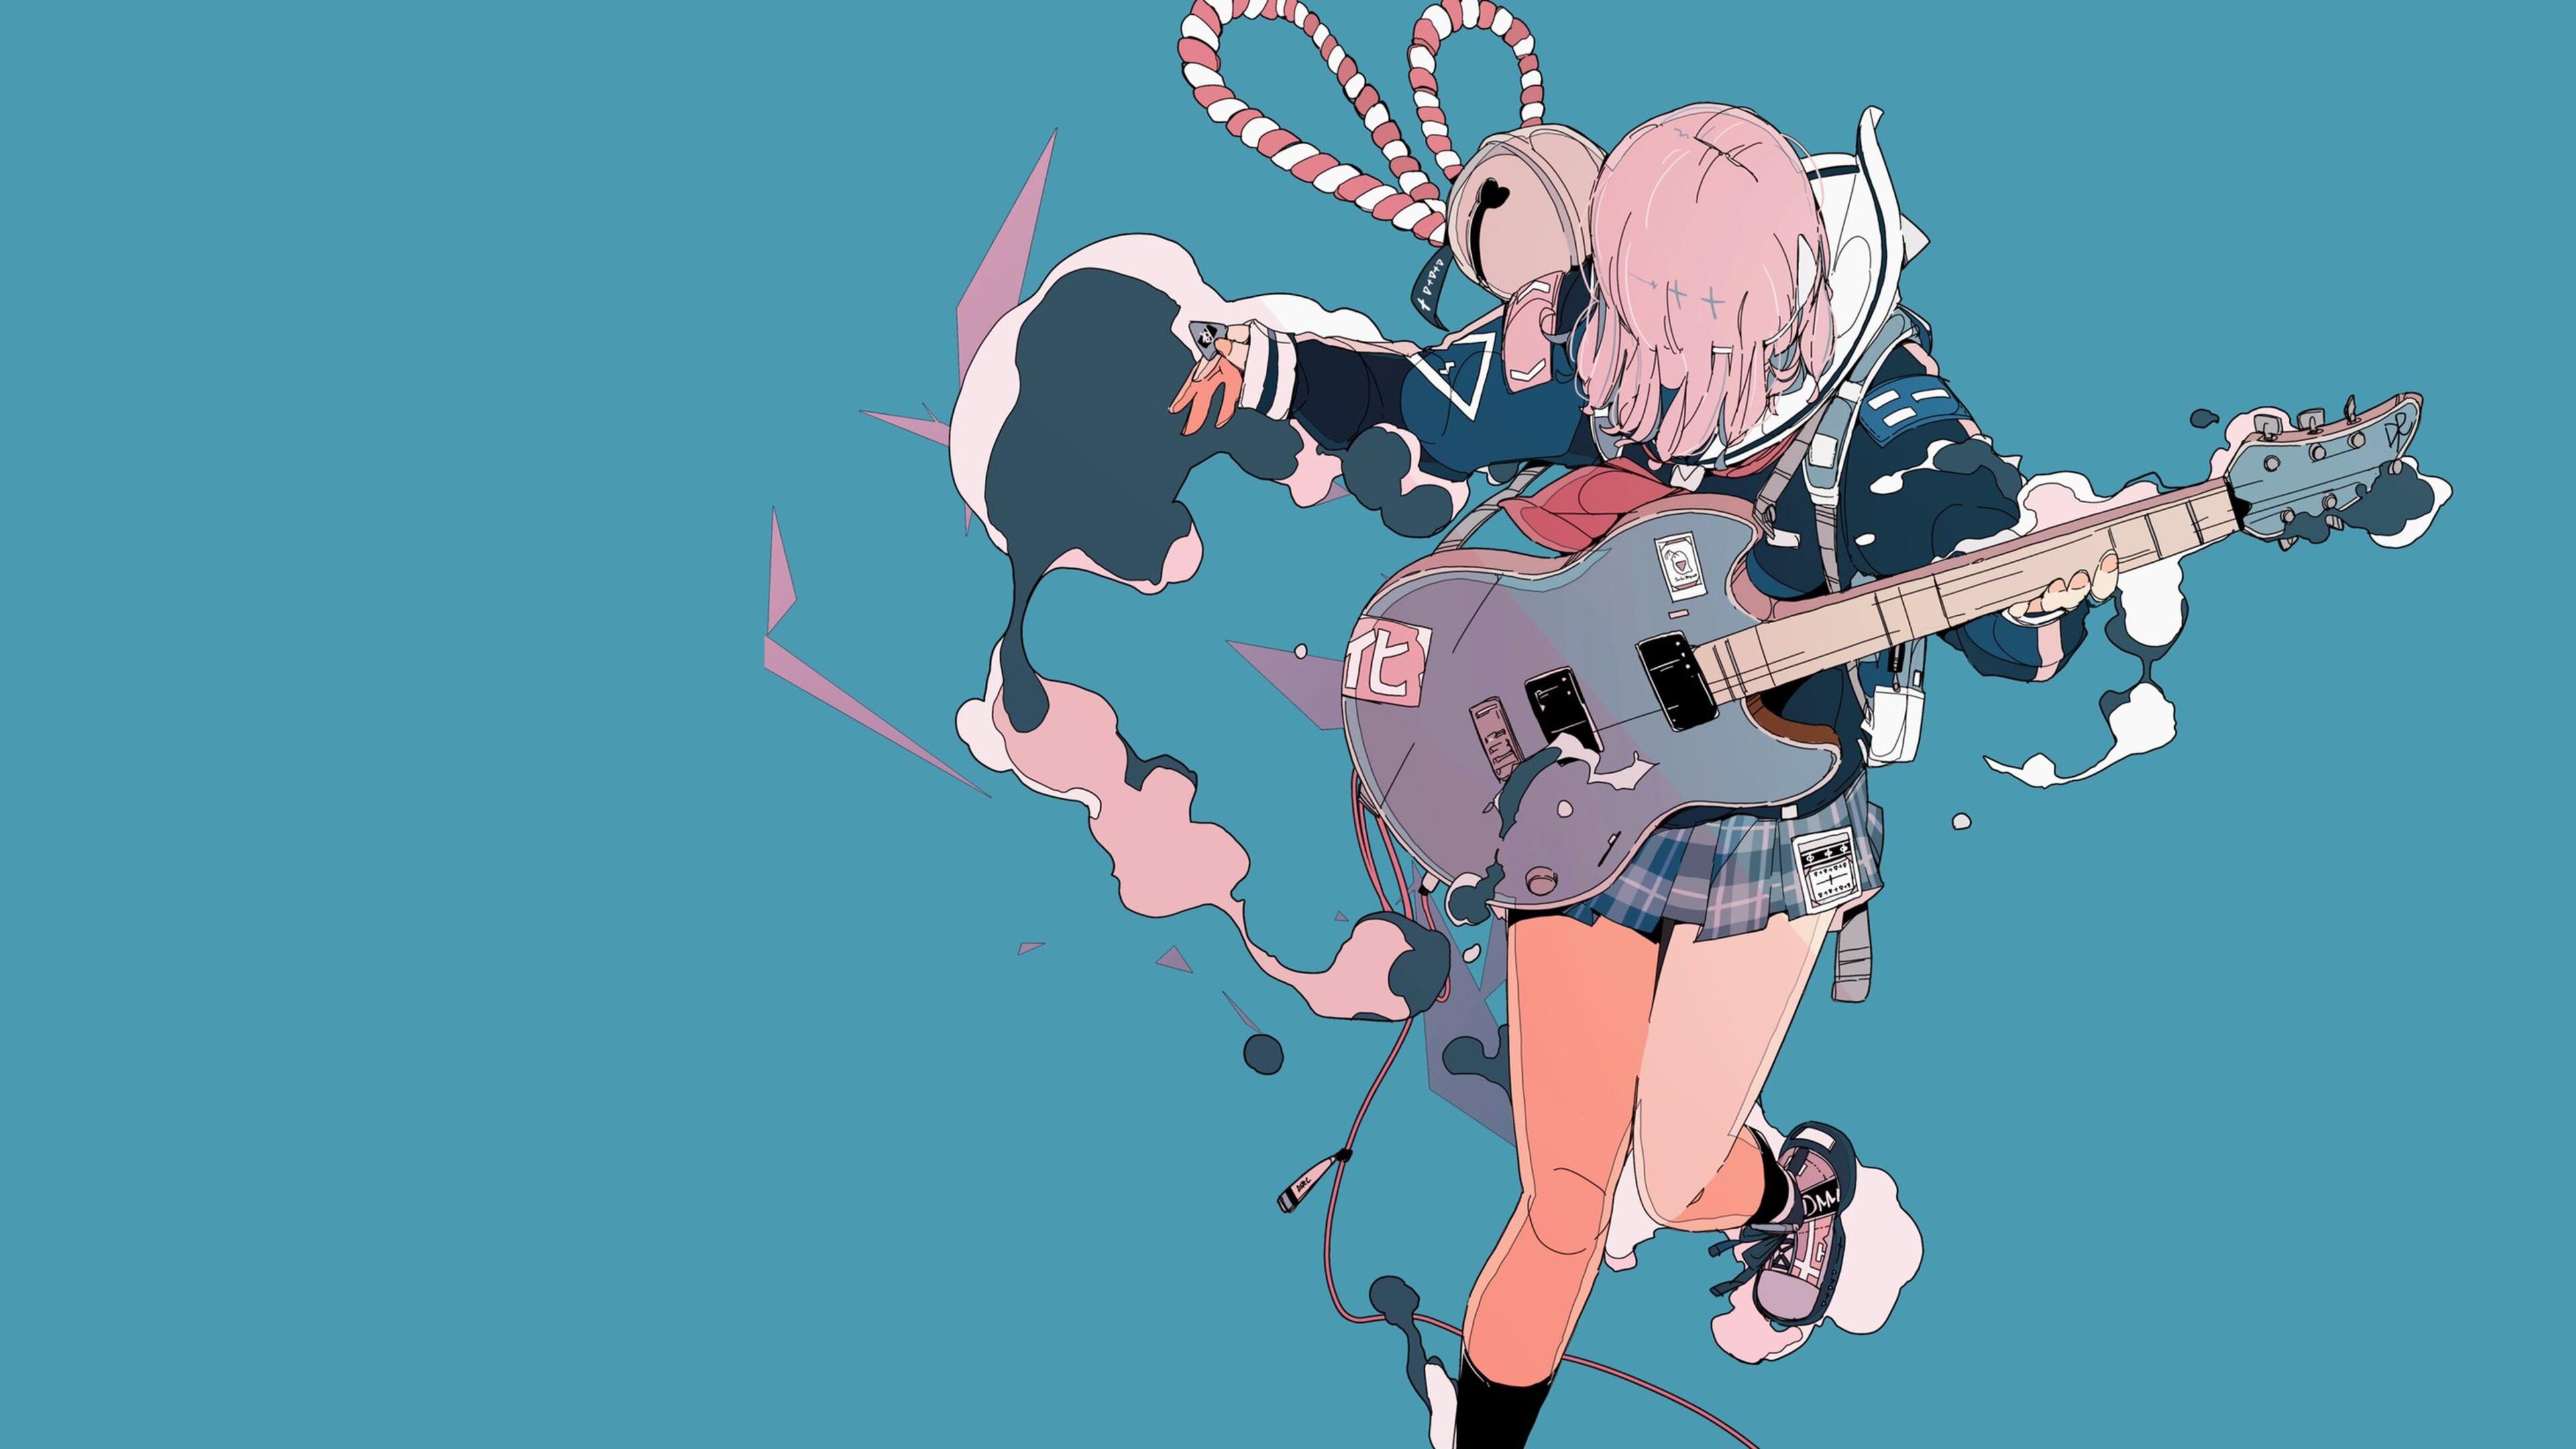 Anime 3840x2160 daisukerichard anime girls original characters minimalism guitar musical instrument bells simple background blue background